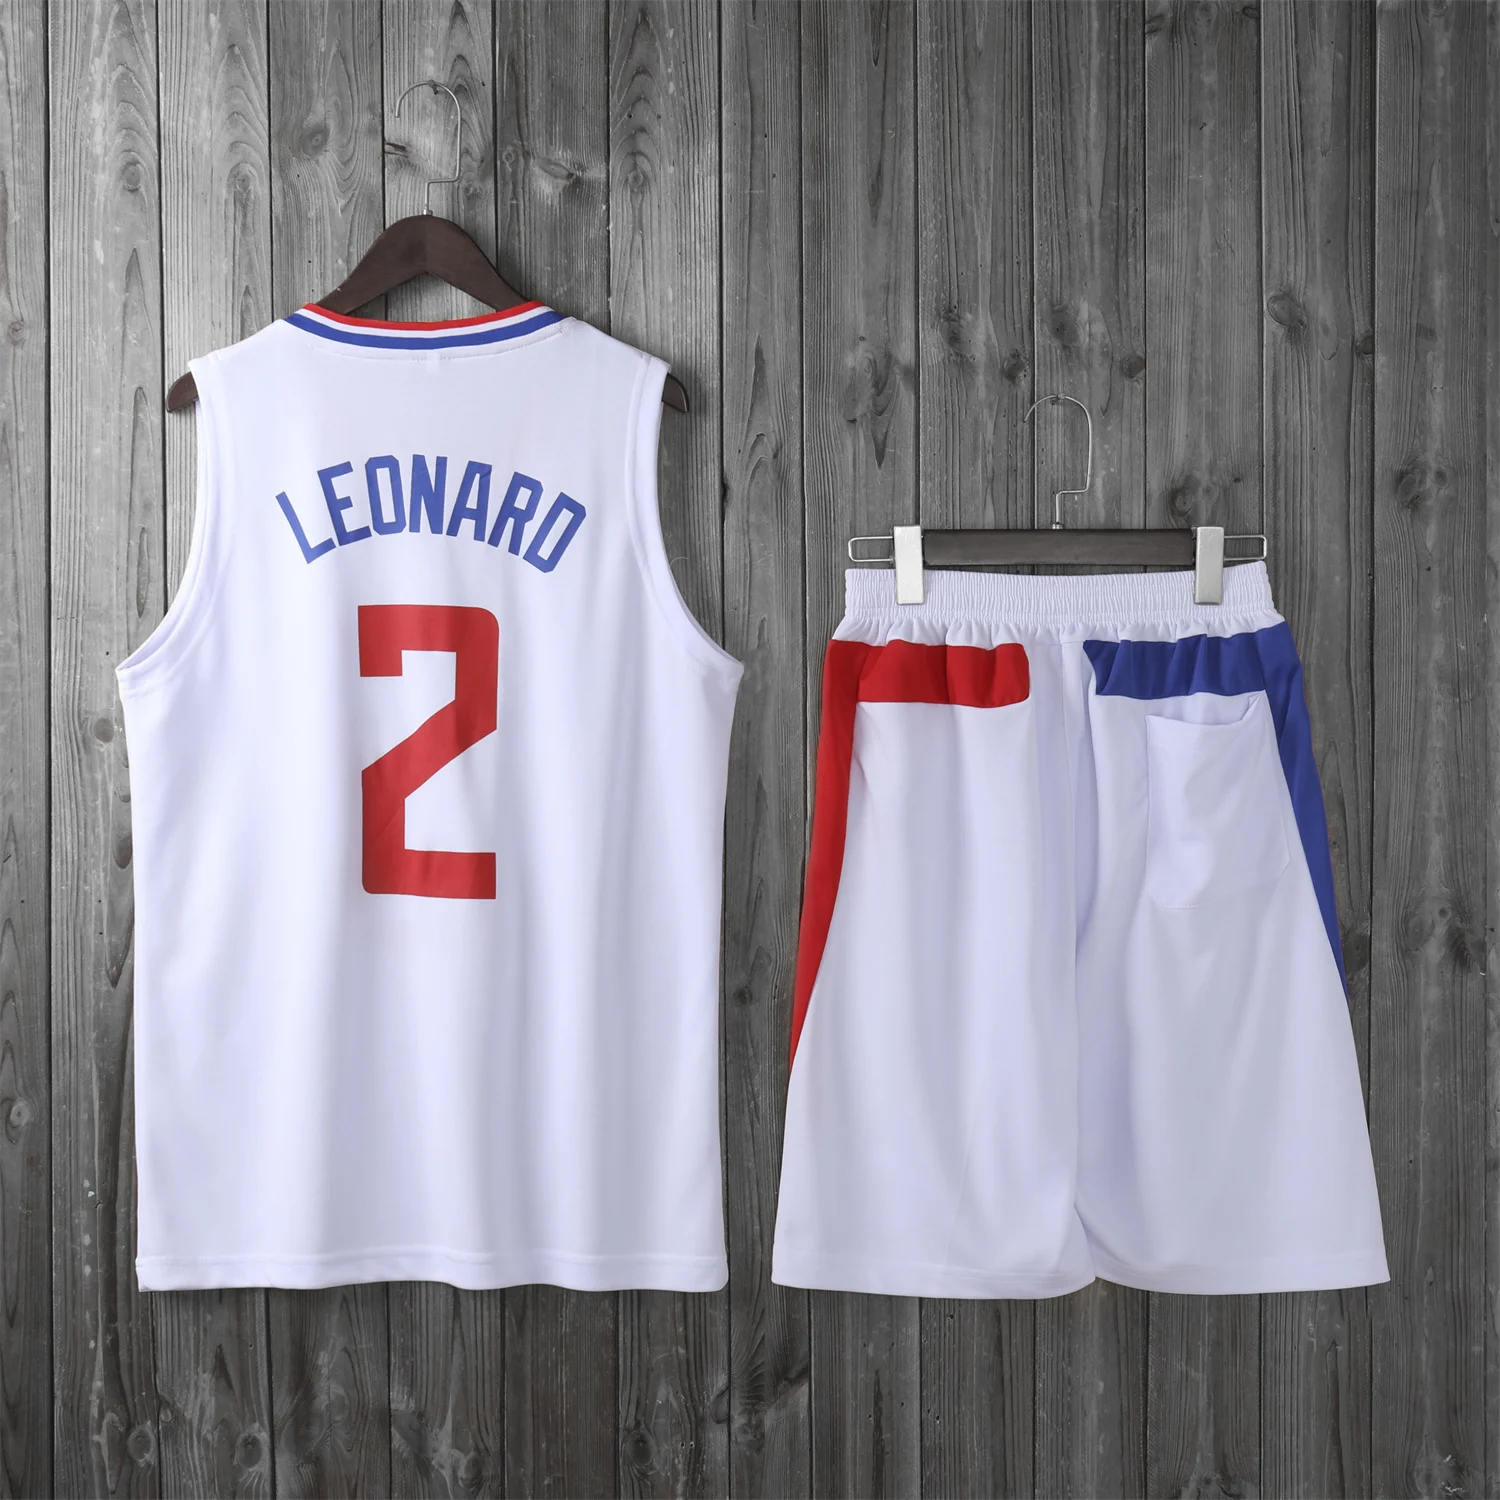 

High Quality USA Basketball Club Player Basketball Uniforms Star LEONARD 2 Has Team Logo Basketball Jerseys